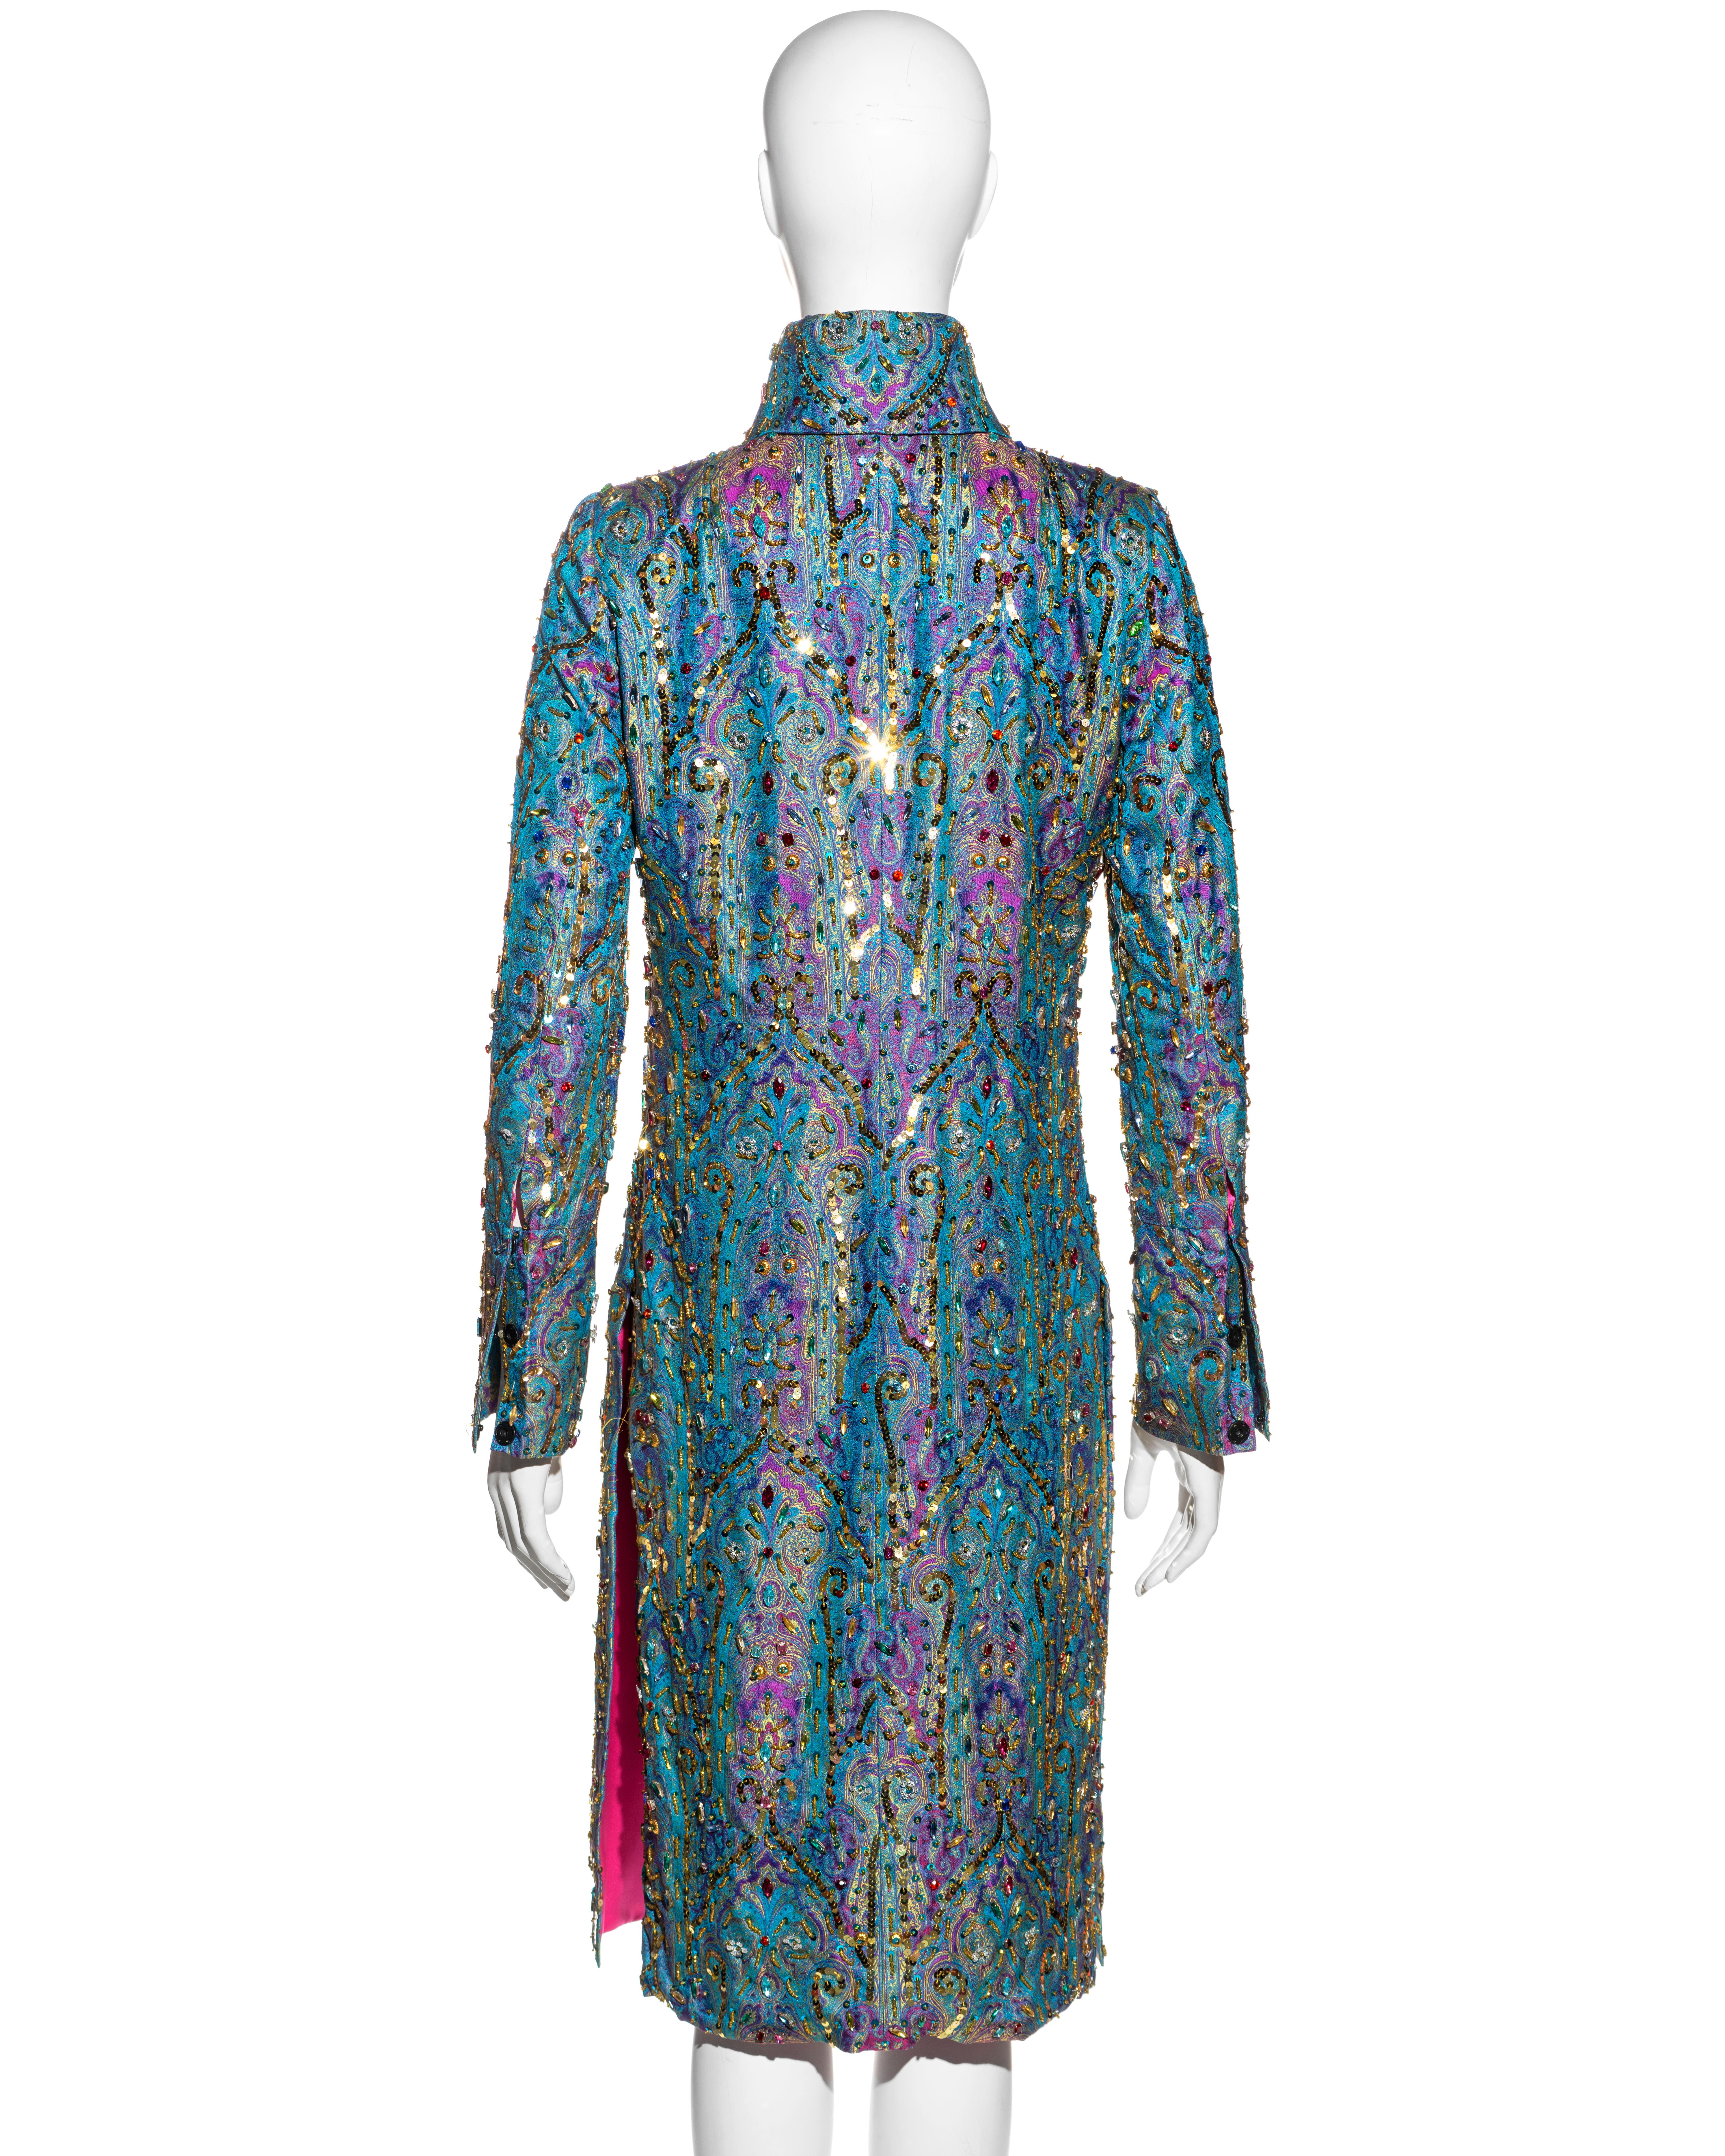 Dolce & Gabbana crystal embellished metallic silk brocade evening coat, ss 2000 For Sale 5